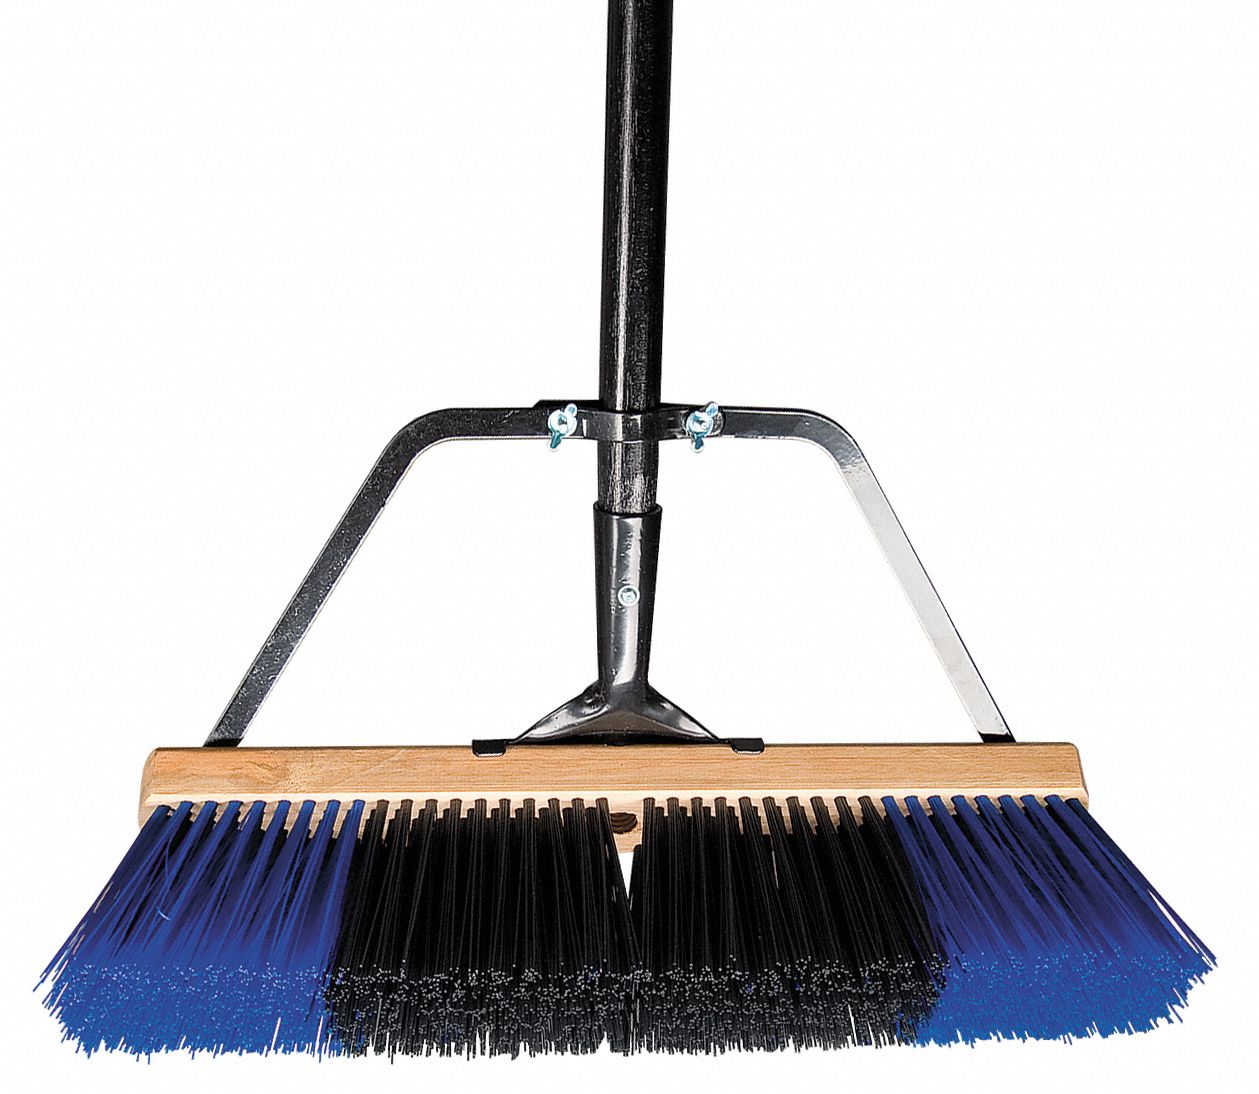 VILEDA PUSH BROOM,BLACK/BLUE,24 IN,MEDIUM-DUTY - Brooms - MNO134484